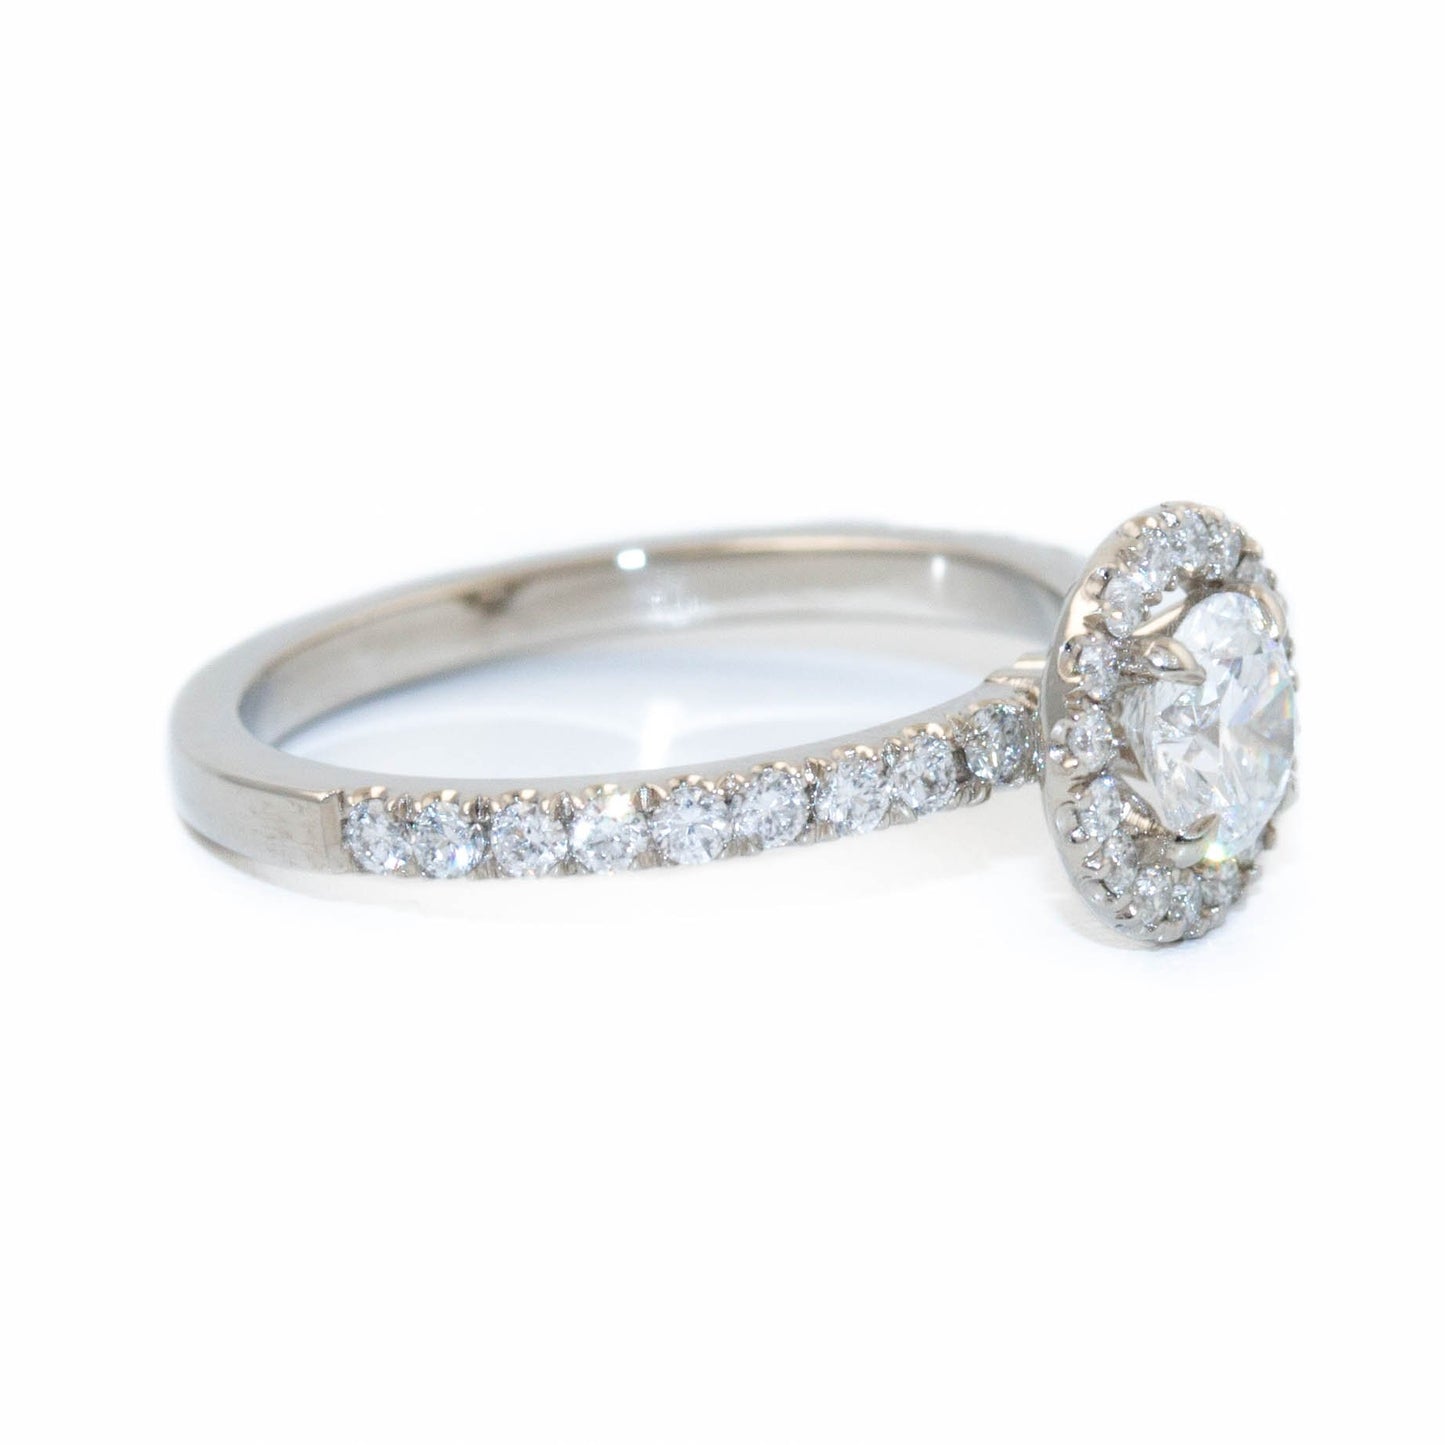 Elegant Pave Diamond Ring - Kingdom Jewelry